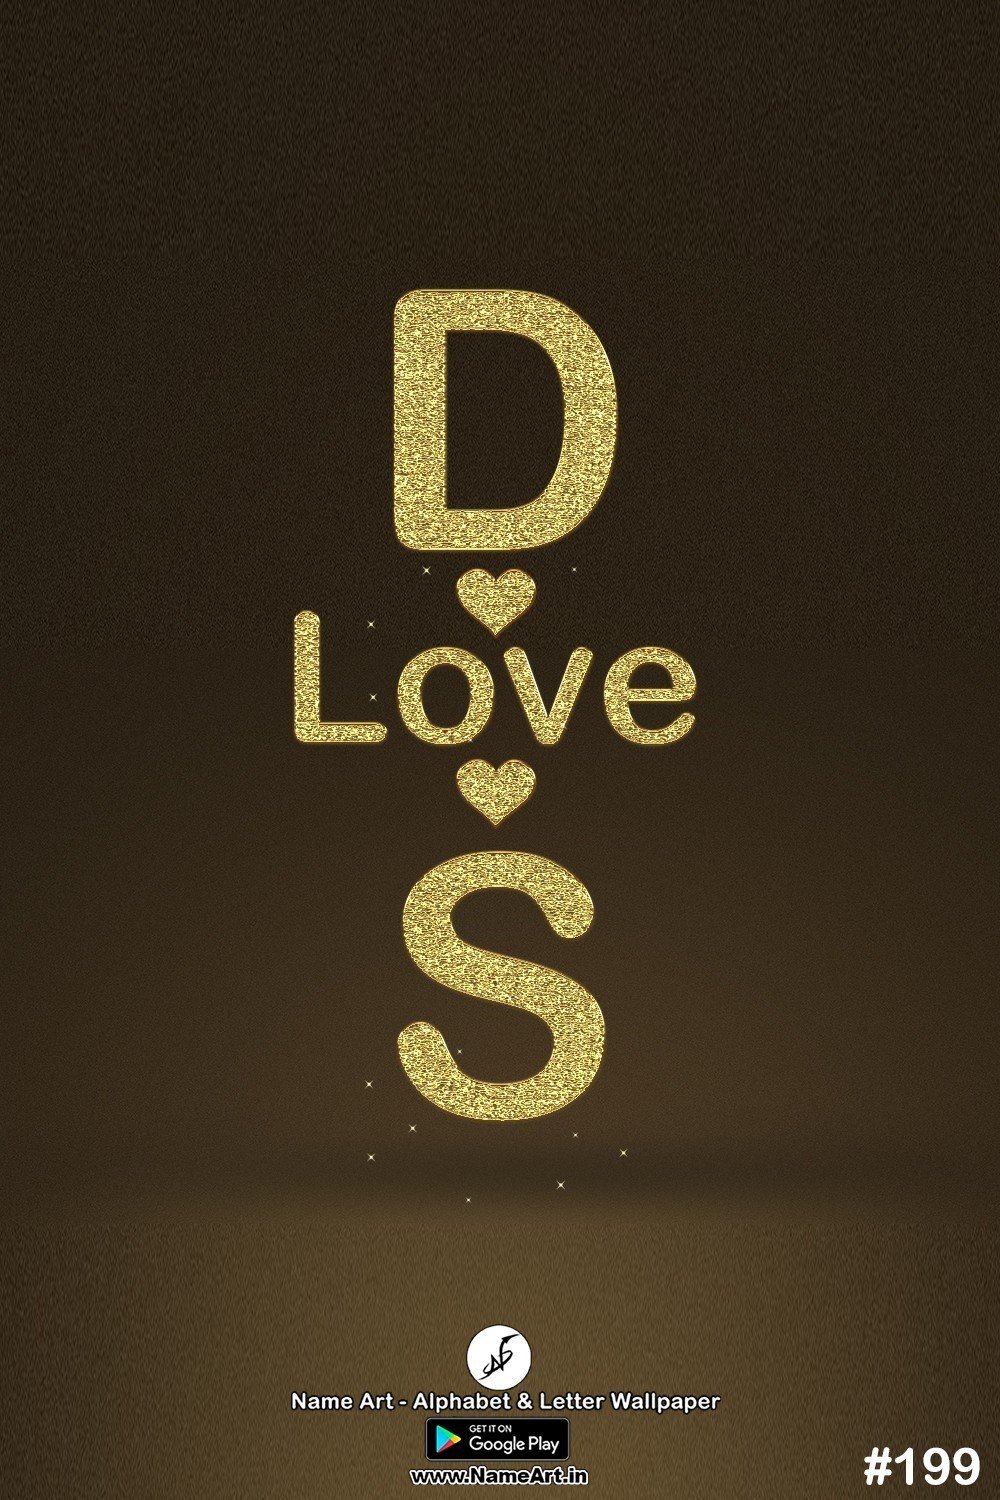 DS | Whatsapp Status DP DS | DS Golden Love Status Cute Couple Whatsapp Status DP !! | New Whatsapp Status DP DS Images |